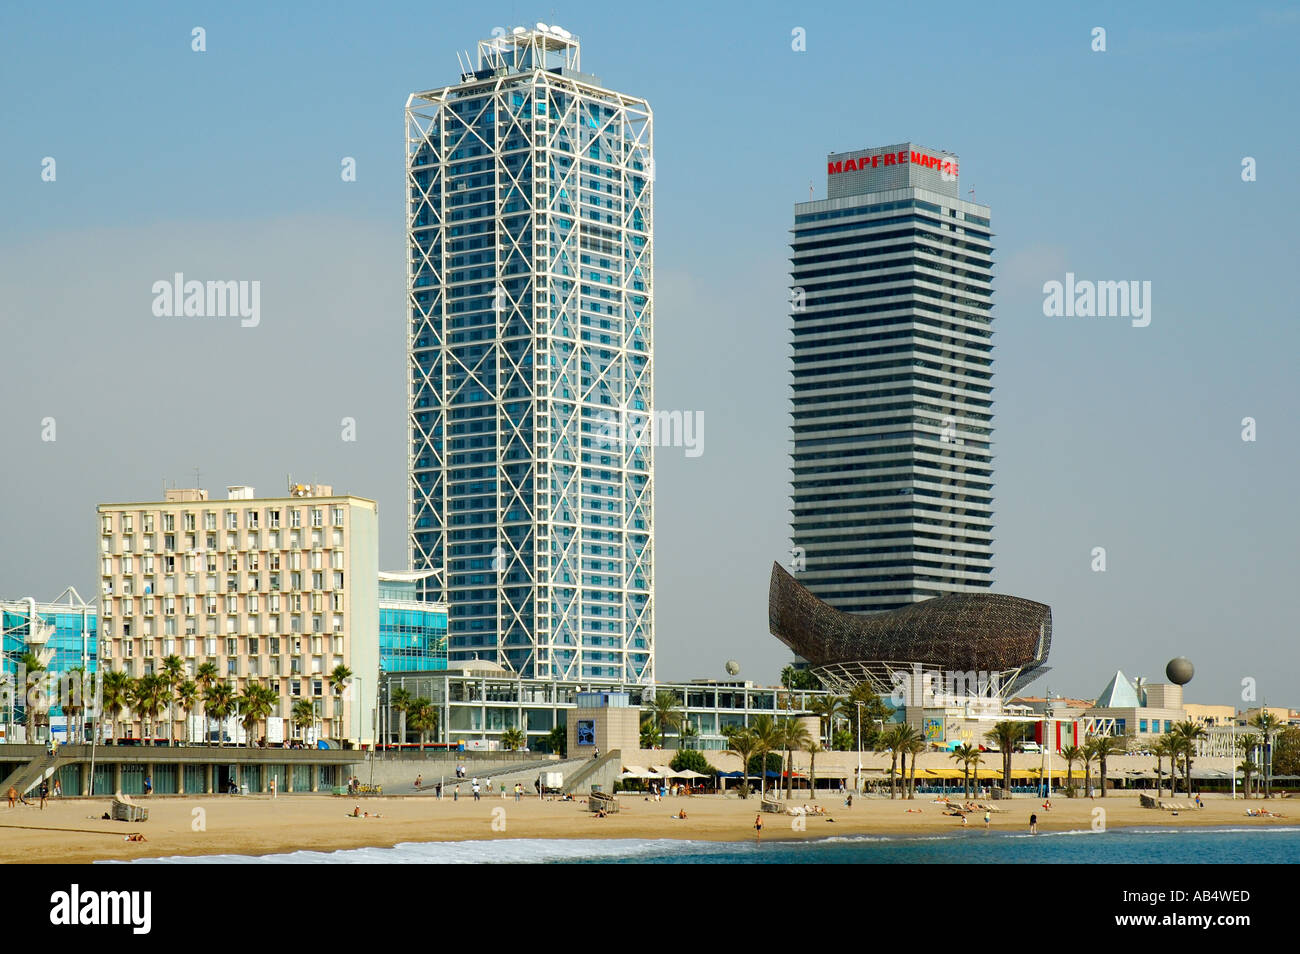 Hotel Arts und dem Torre Mapfre Gebäude, Port Olímpic, Barcelona, Spanien Stockfoto